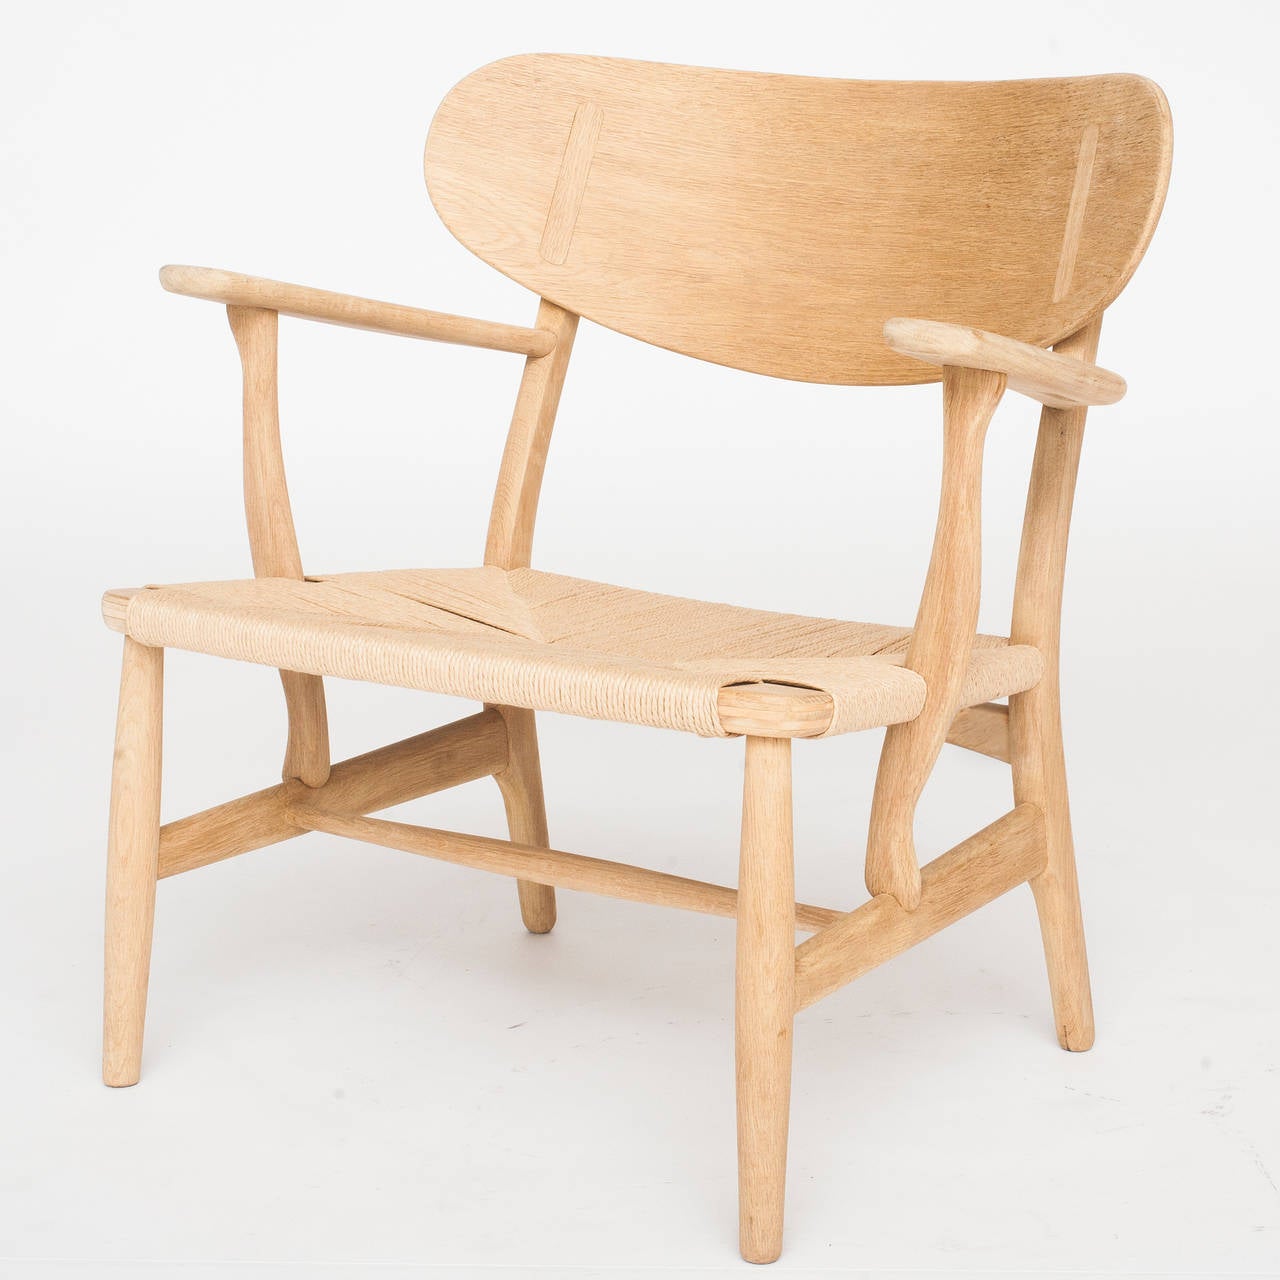 Hans J. Wegner / Carl Hansen & Son.
Lounge chair.
Model: CH 22
Oak & paper cord.